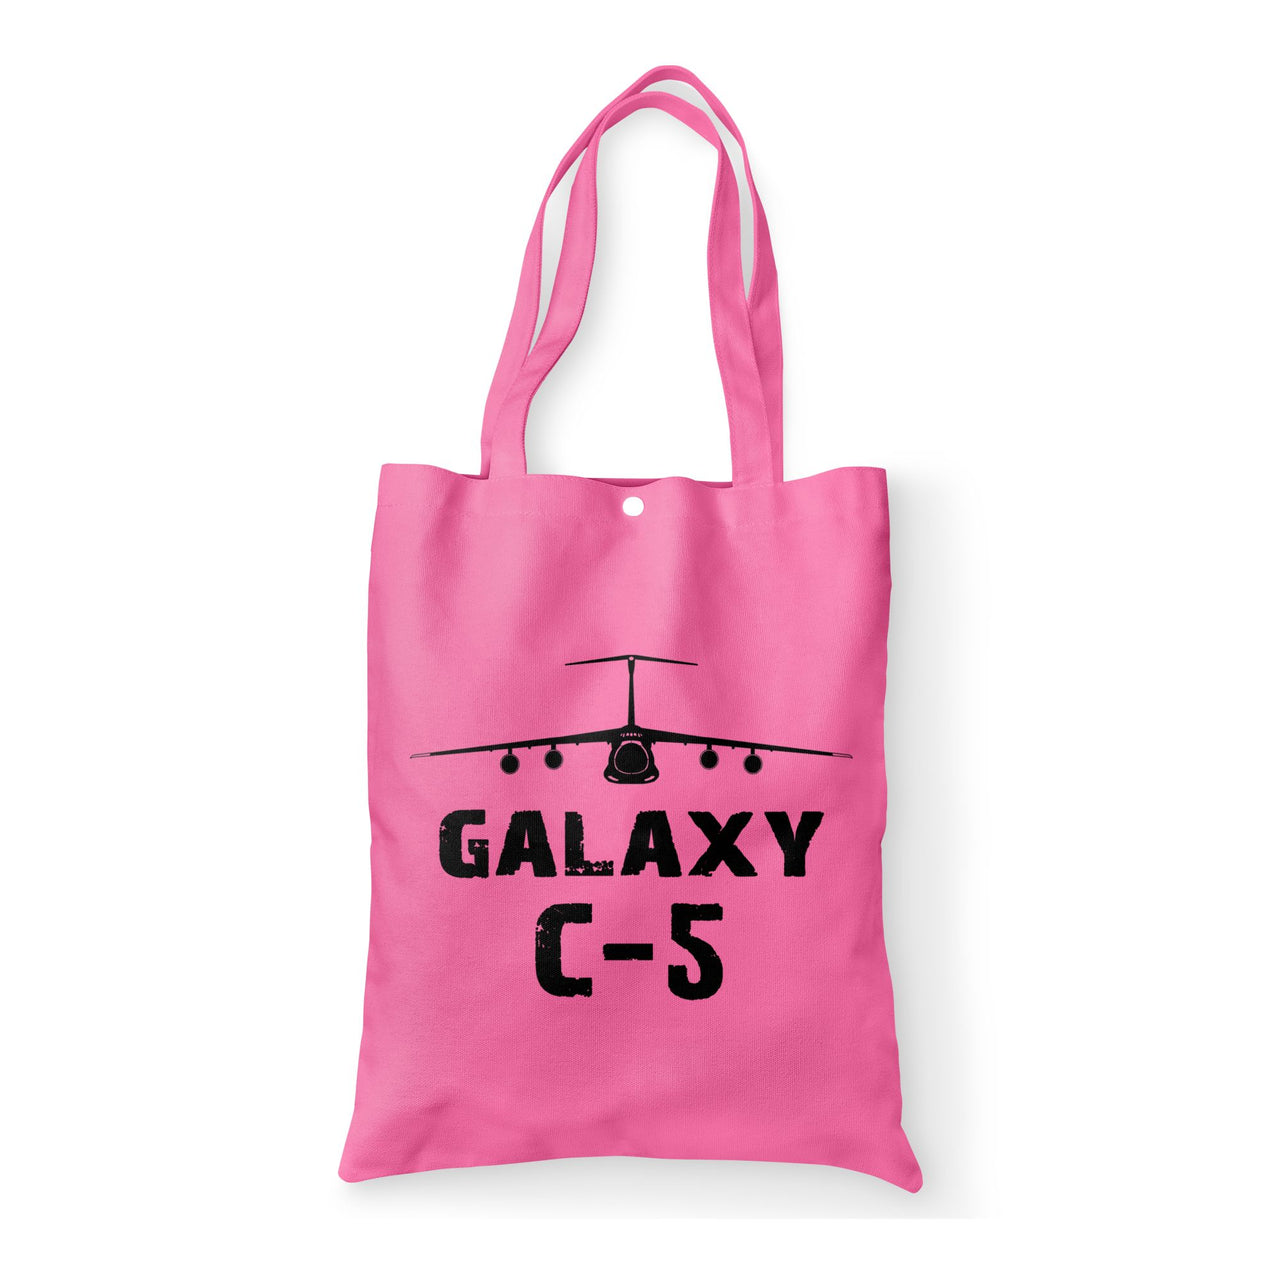 Galaxy C-5 & Plane Designed Tote Bags